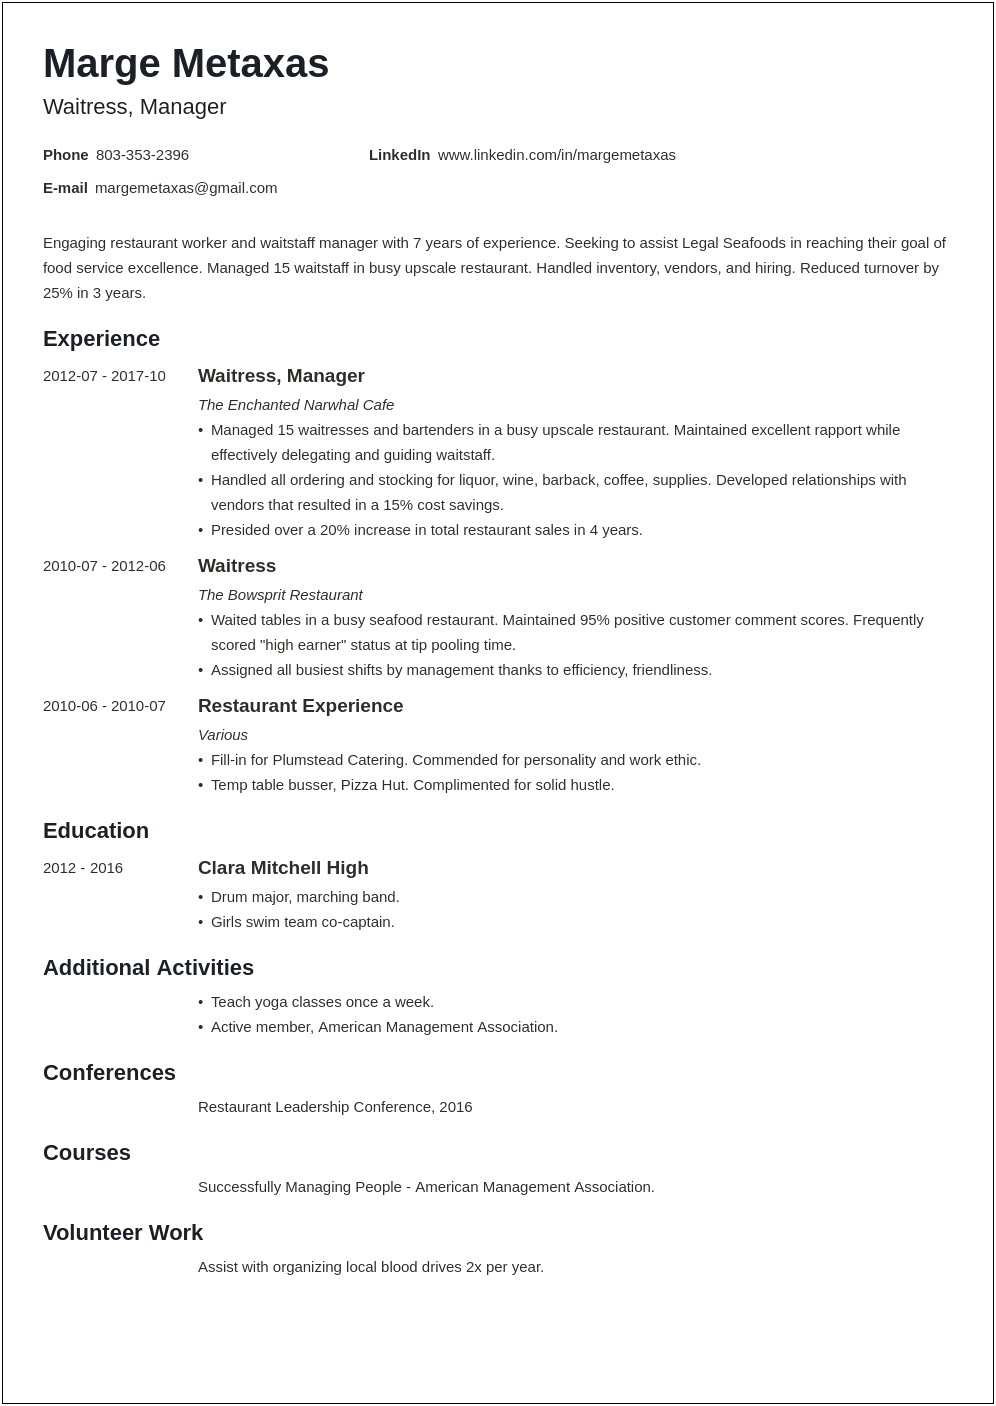 Free Resume Templates For Restaurant Jobs